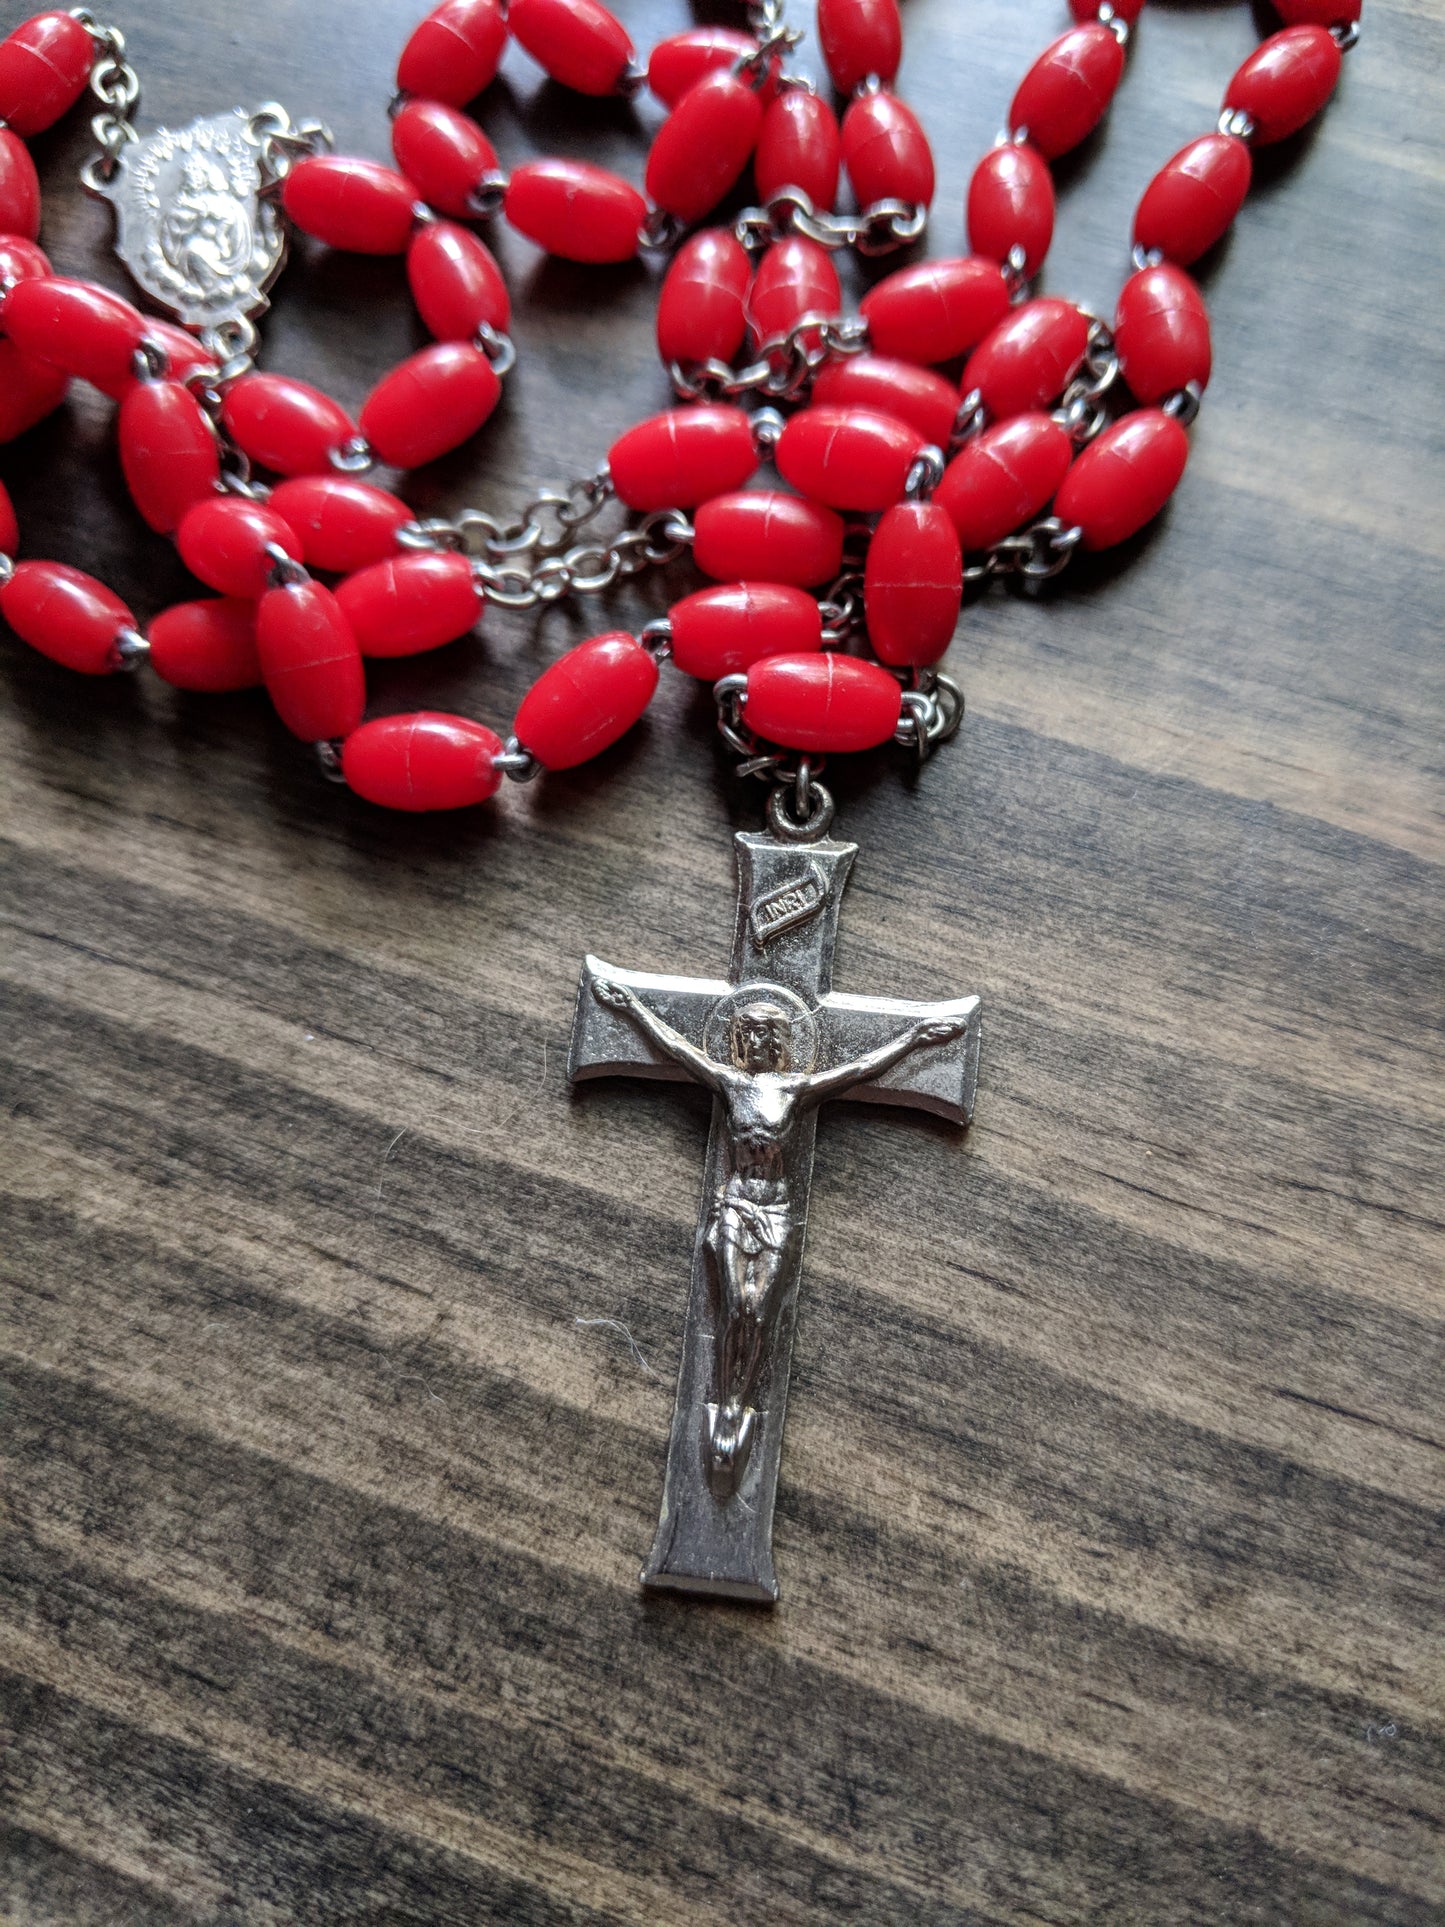 Vintage Rosary Red Plastic Beads Catholic Prayer Religion